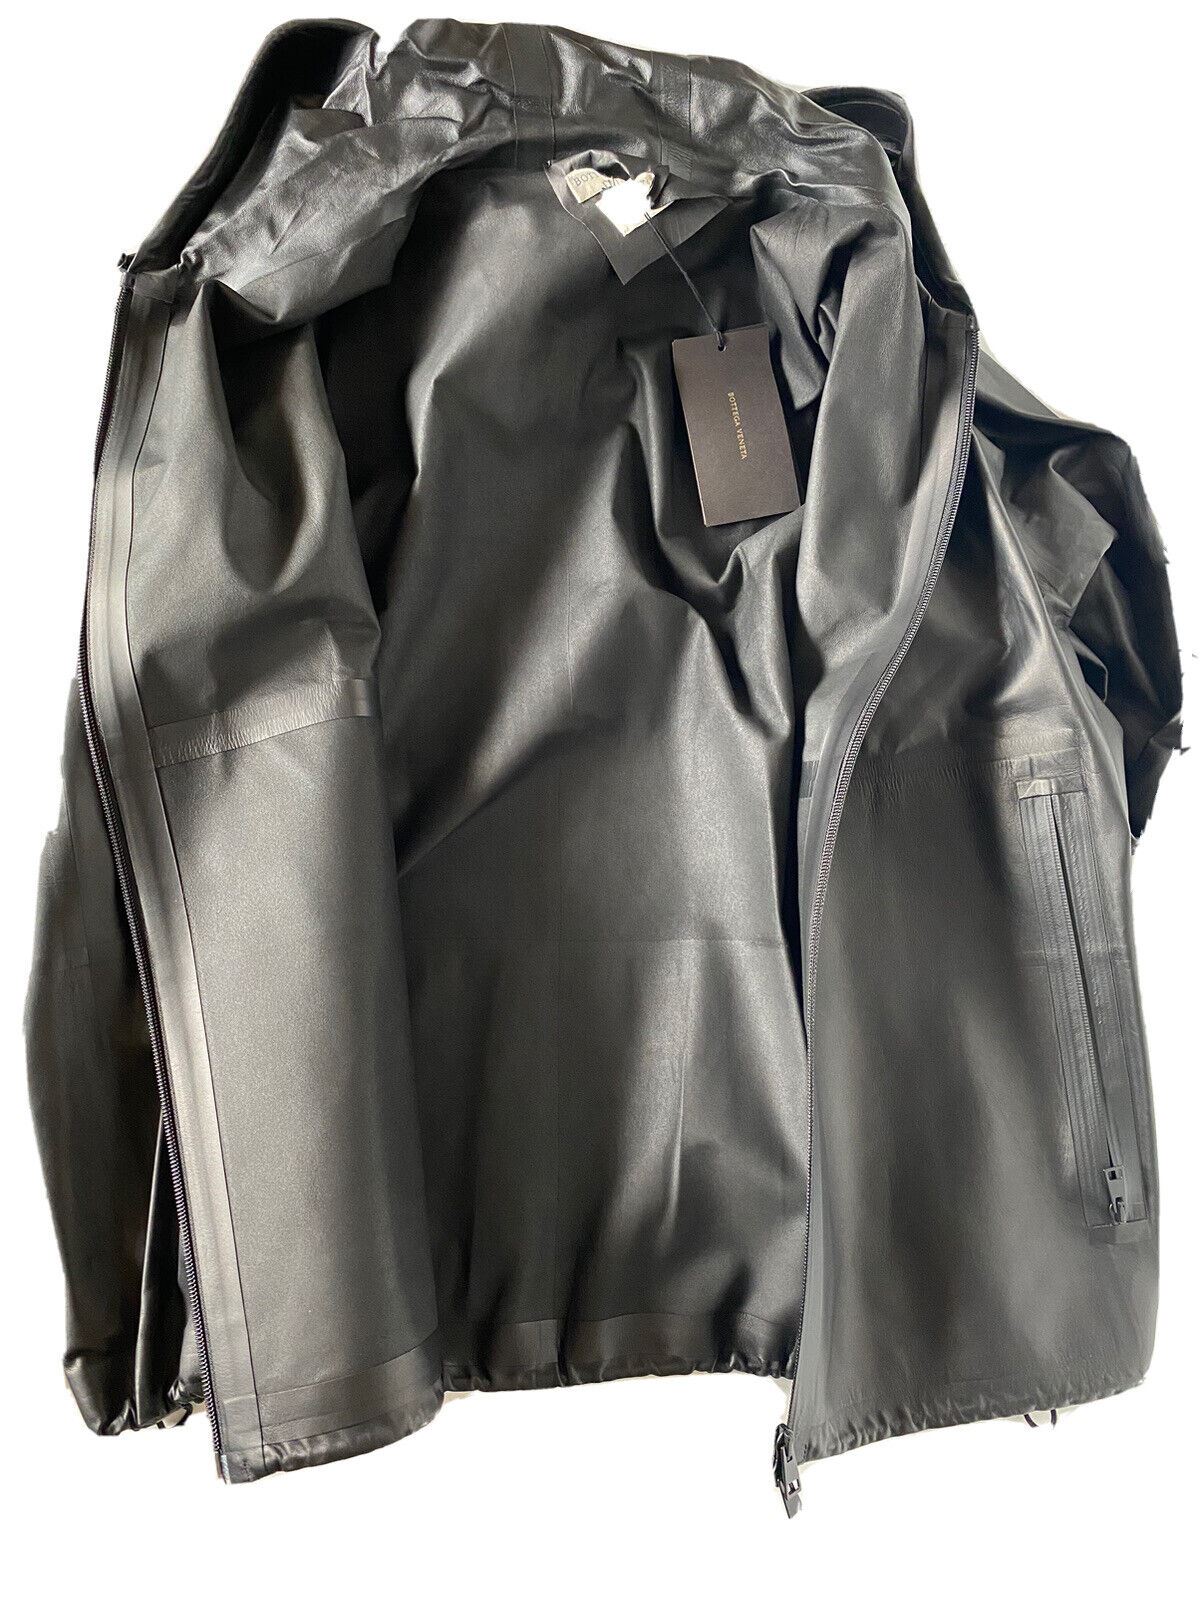 NWT $5900 Bottega Veneta Men's Calf Leather Light Jacket with Hoodie Black 42 US